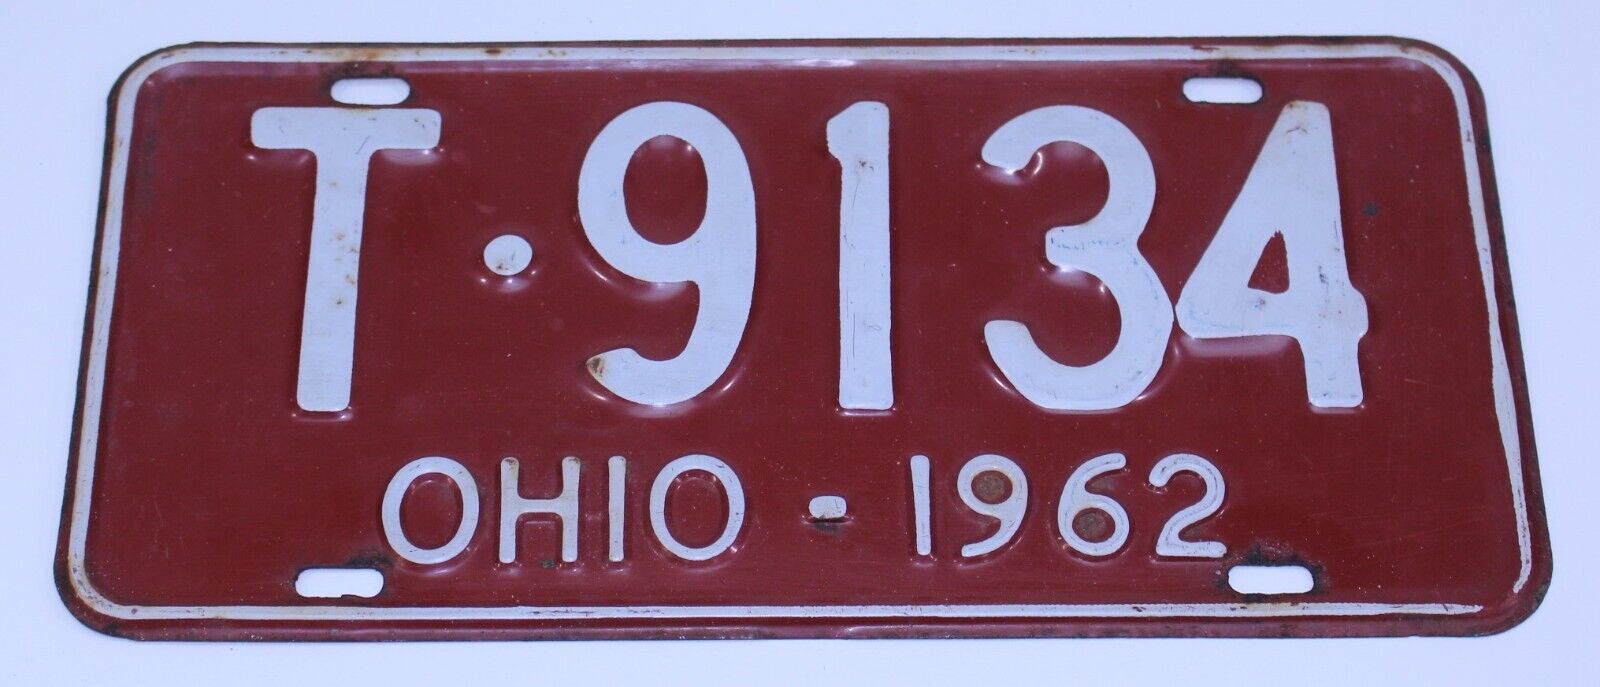 Ohio 1962 VTG License Plate Auto Tag Car T-9134 Red White Passenger Original OH